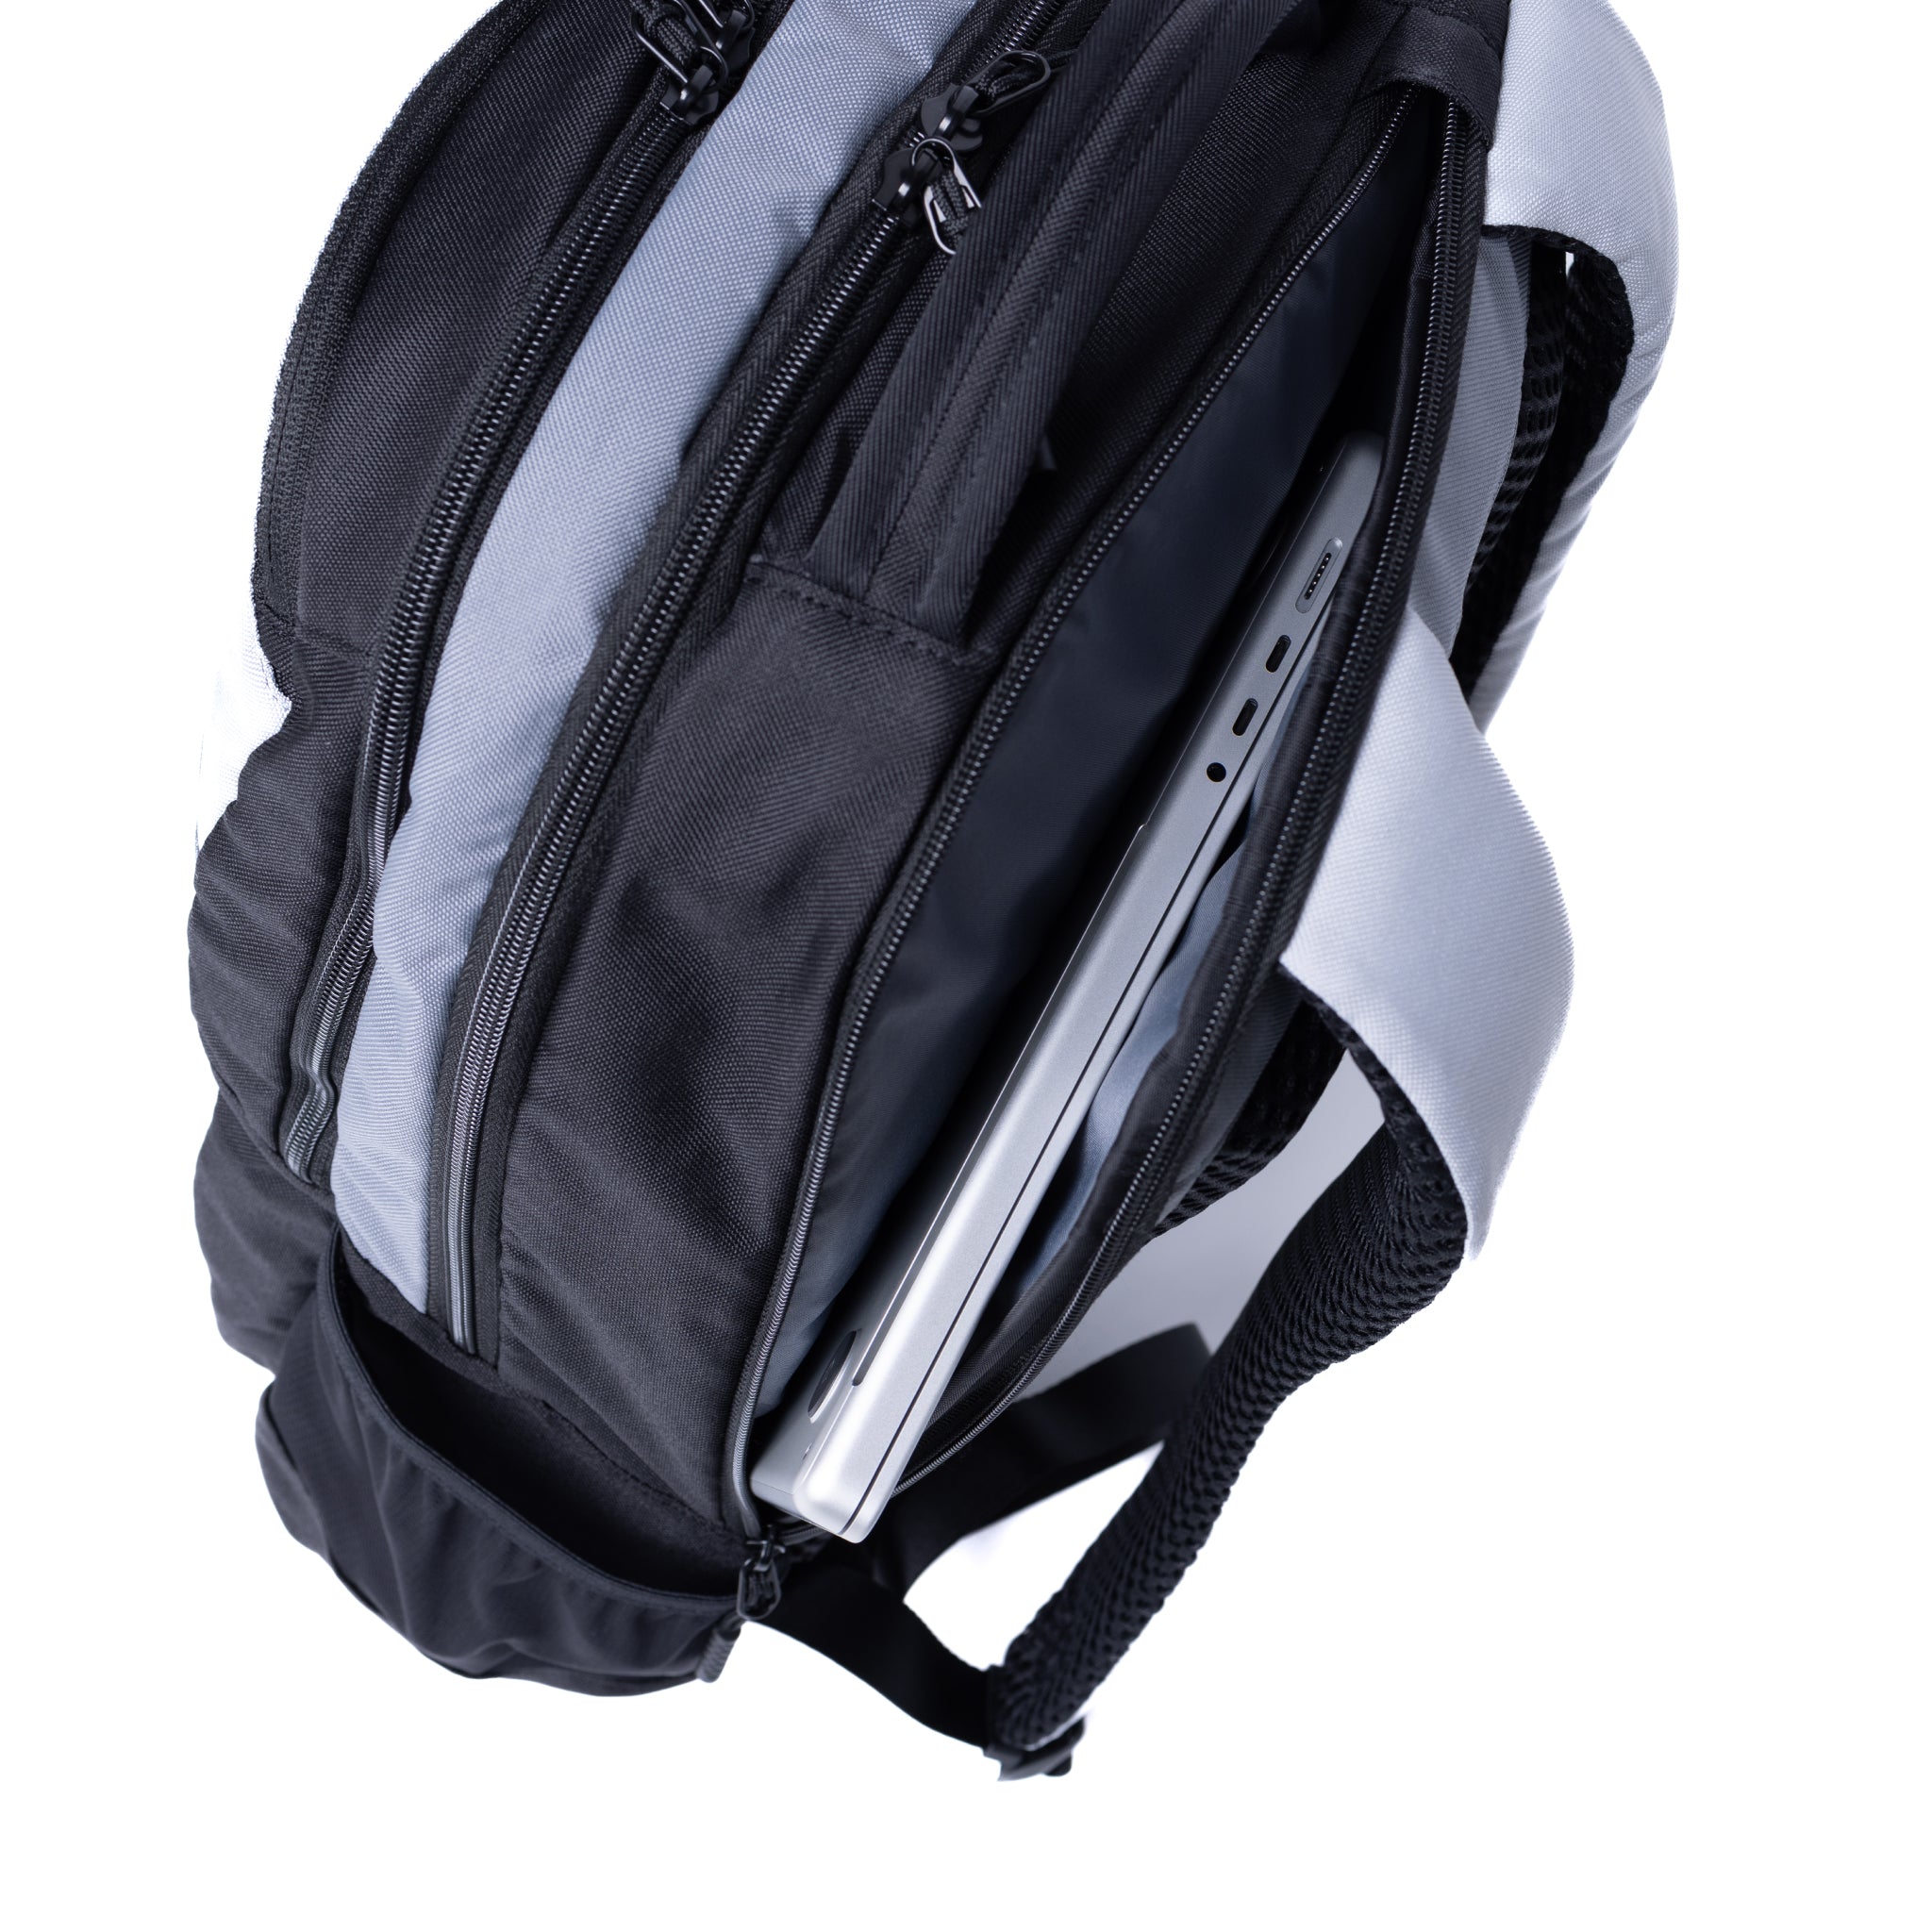 Jones Sports Co. A1 Backpack - Charcoal/Moon Gray